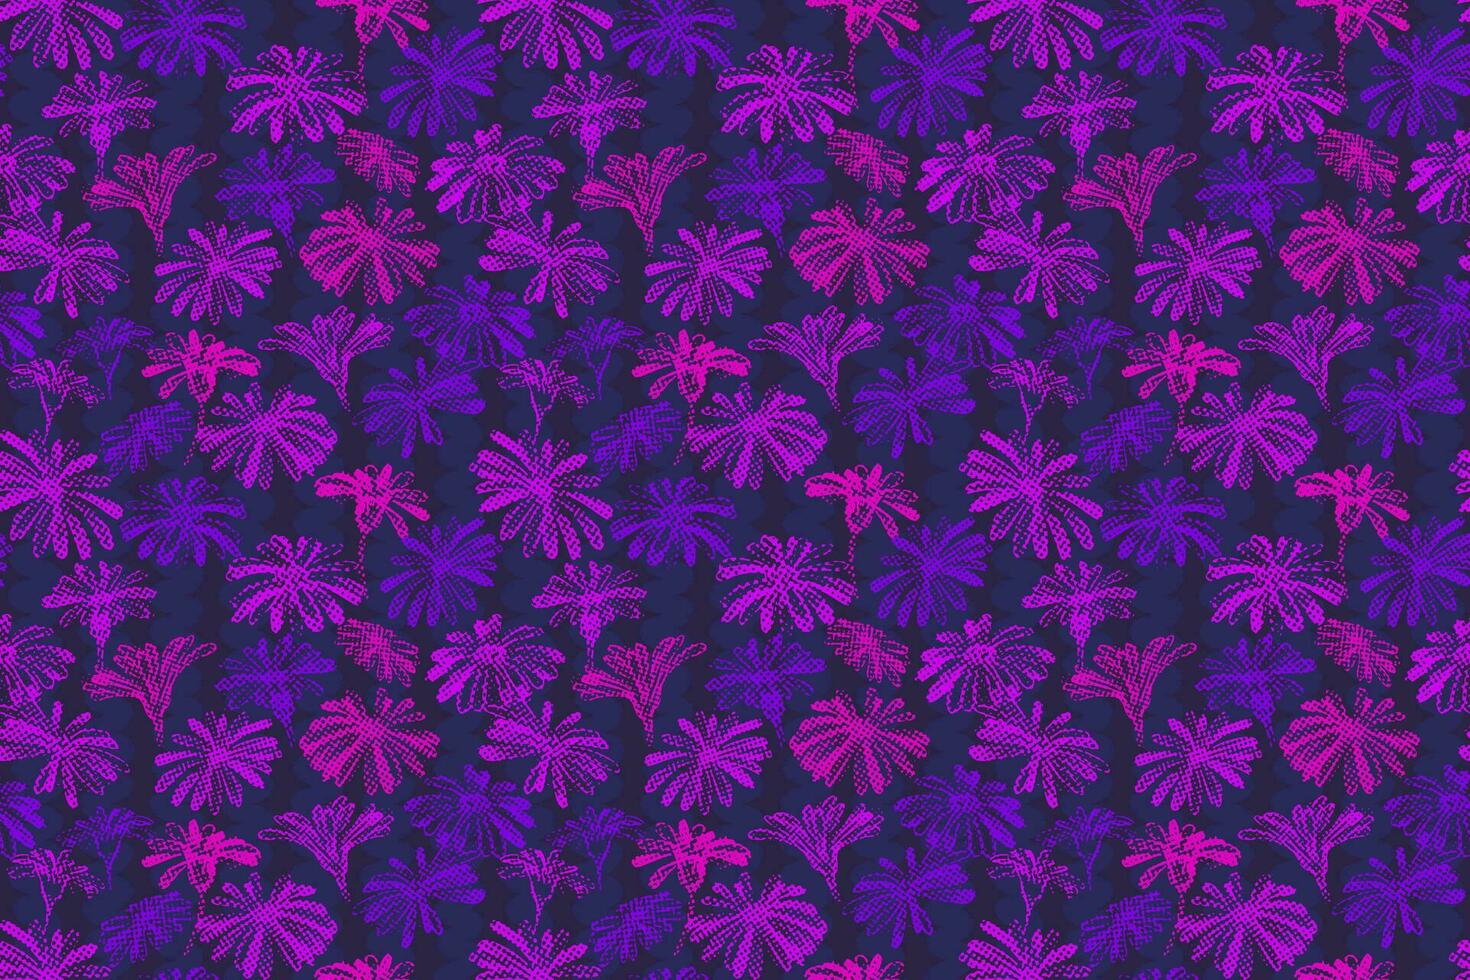 resumen sin costura modelo con texturizado forma orgánico flores púrpura cepillo siluetas floral impresión. vector mano dibujado. modelo para diseño, moda, papel, cubrir, tela, interior decoración,